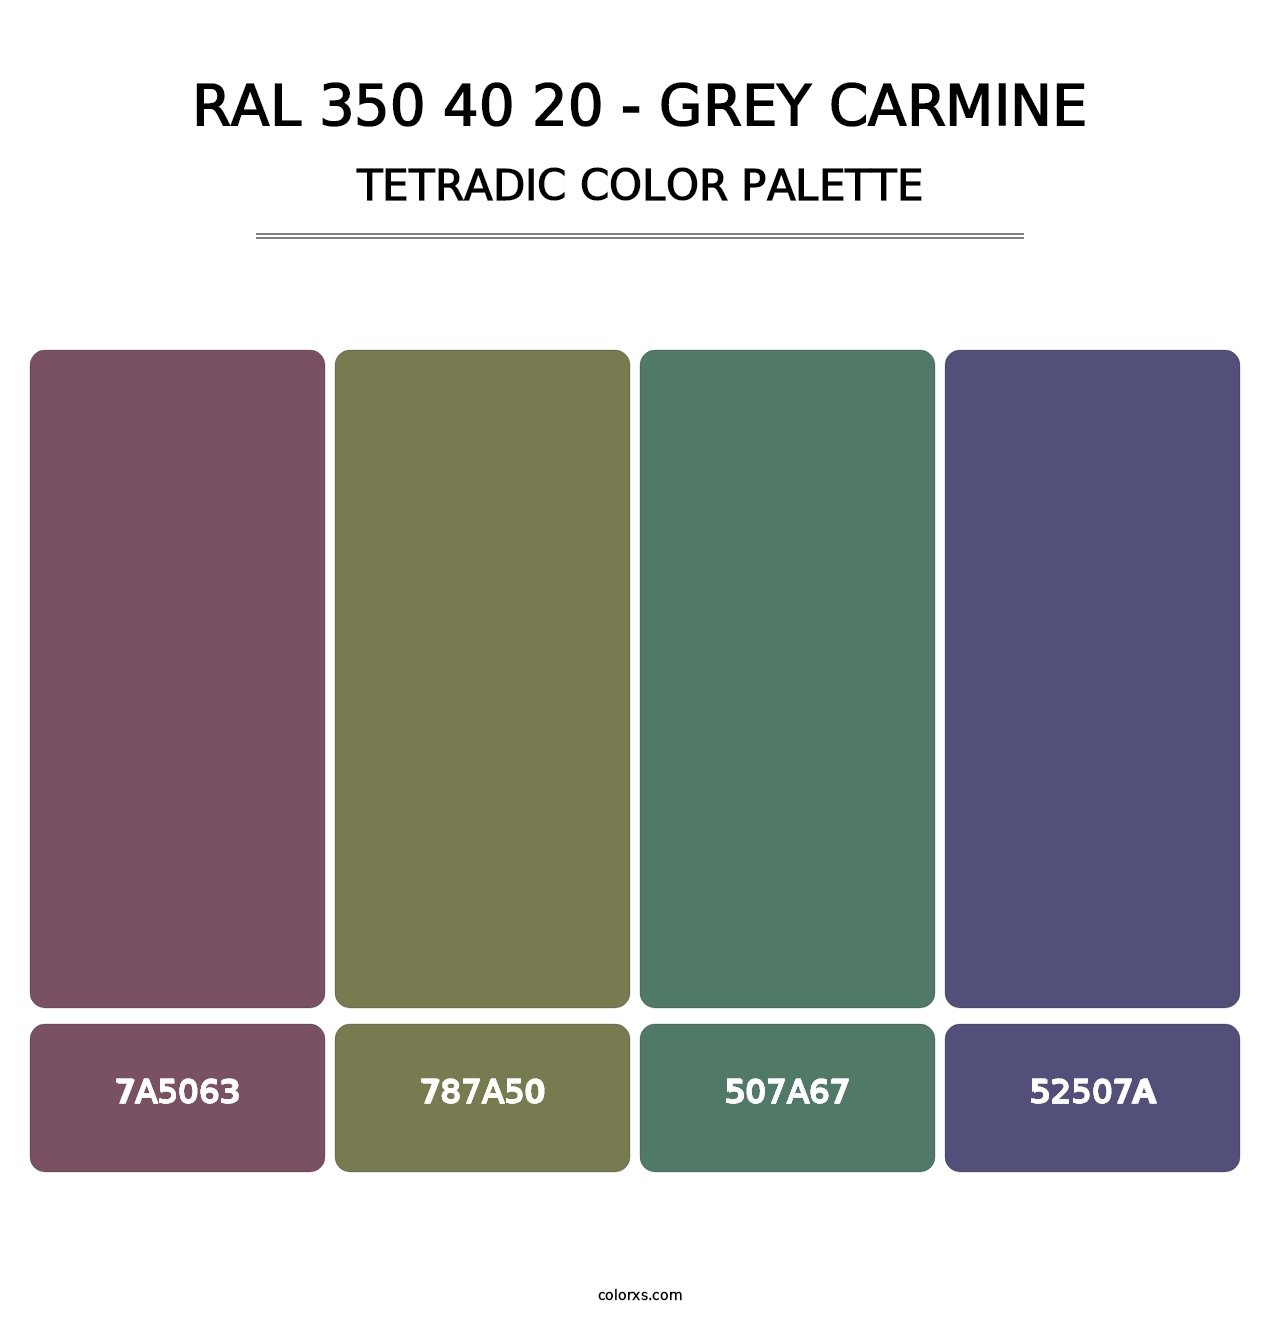 RAL 350 40 20 - Grey Carmine - Tetradic Color Palette